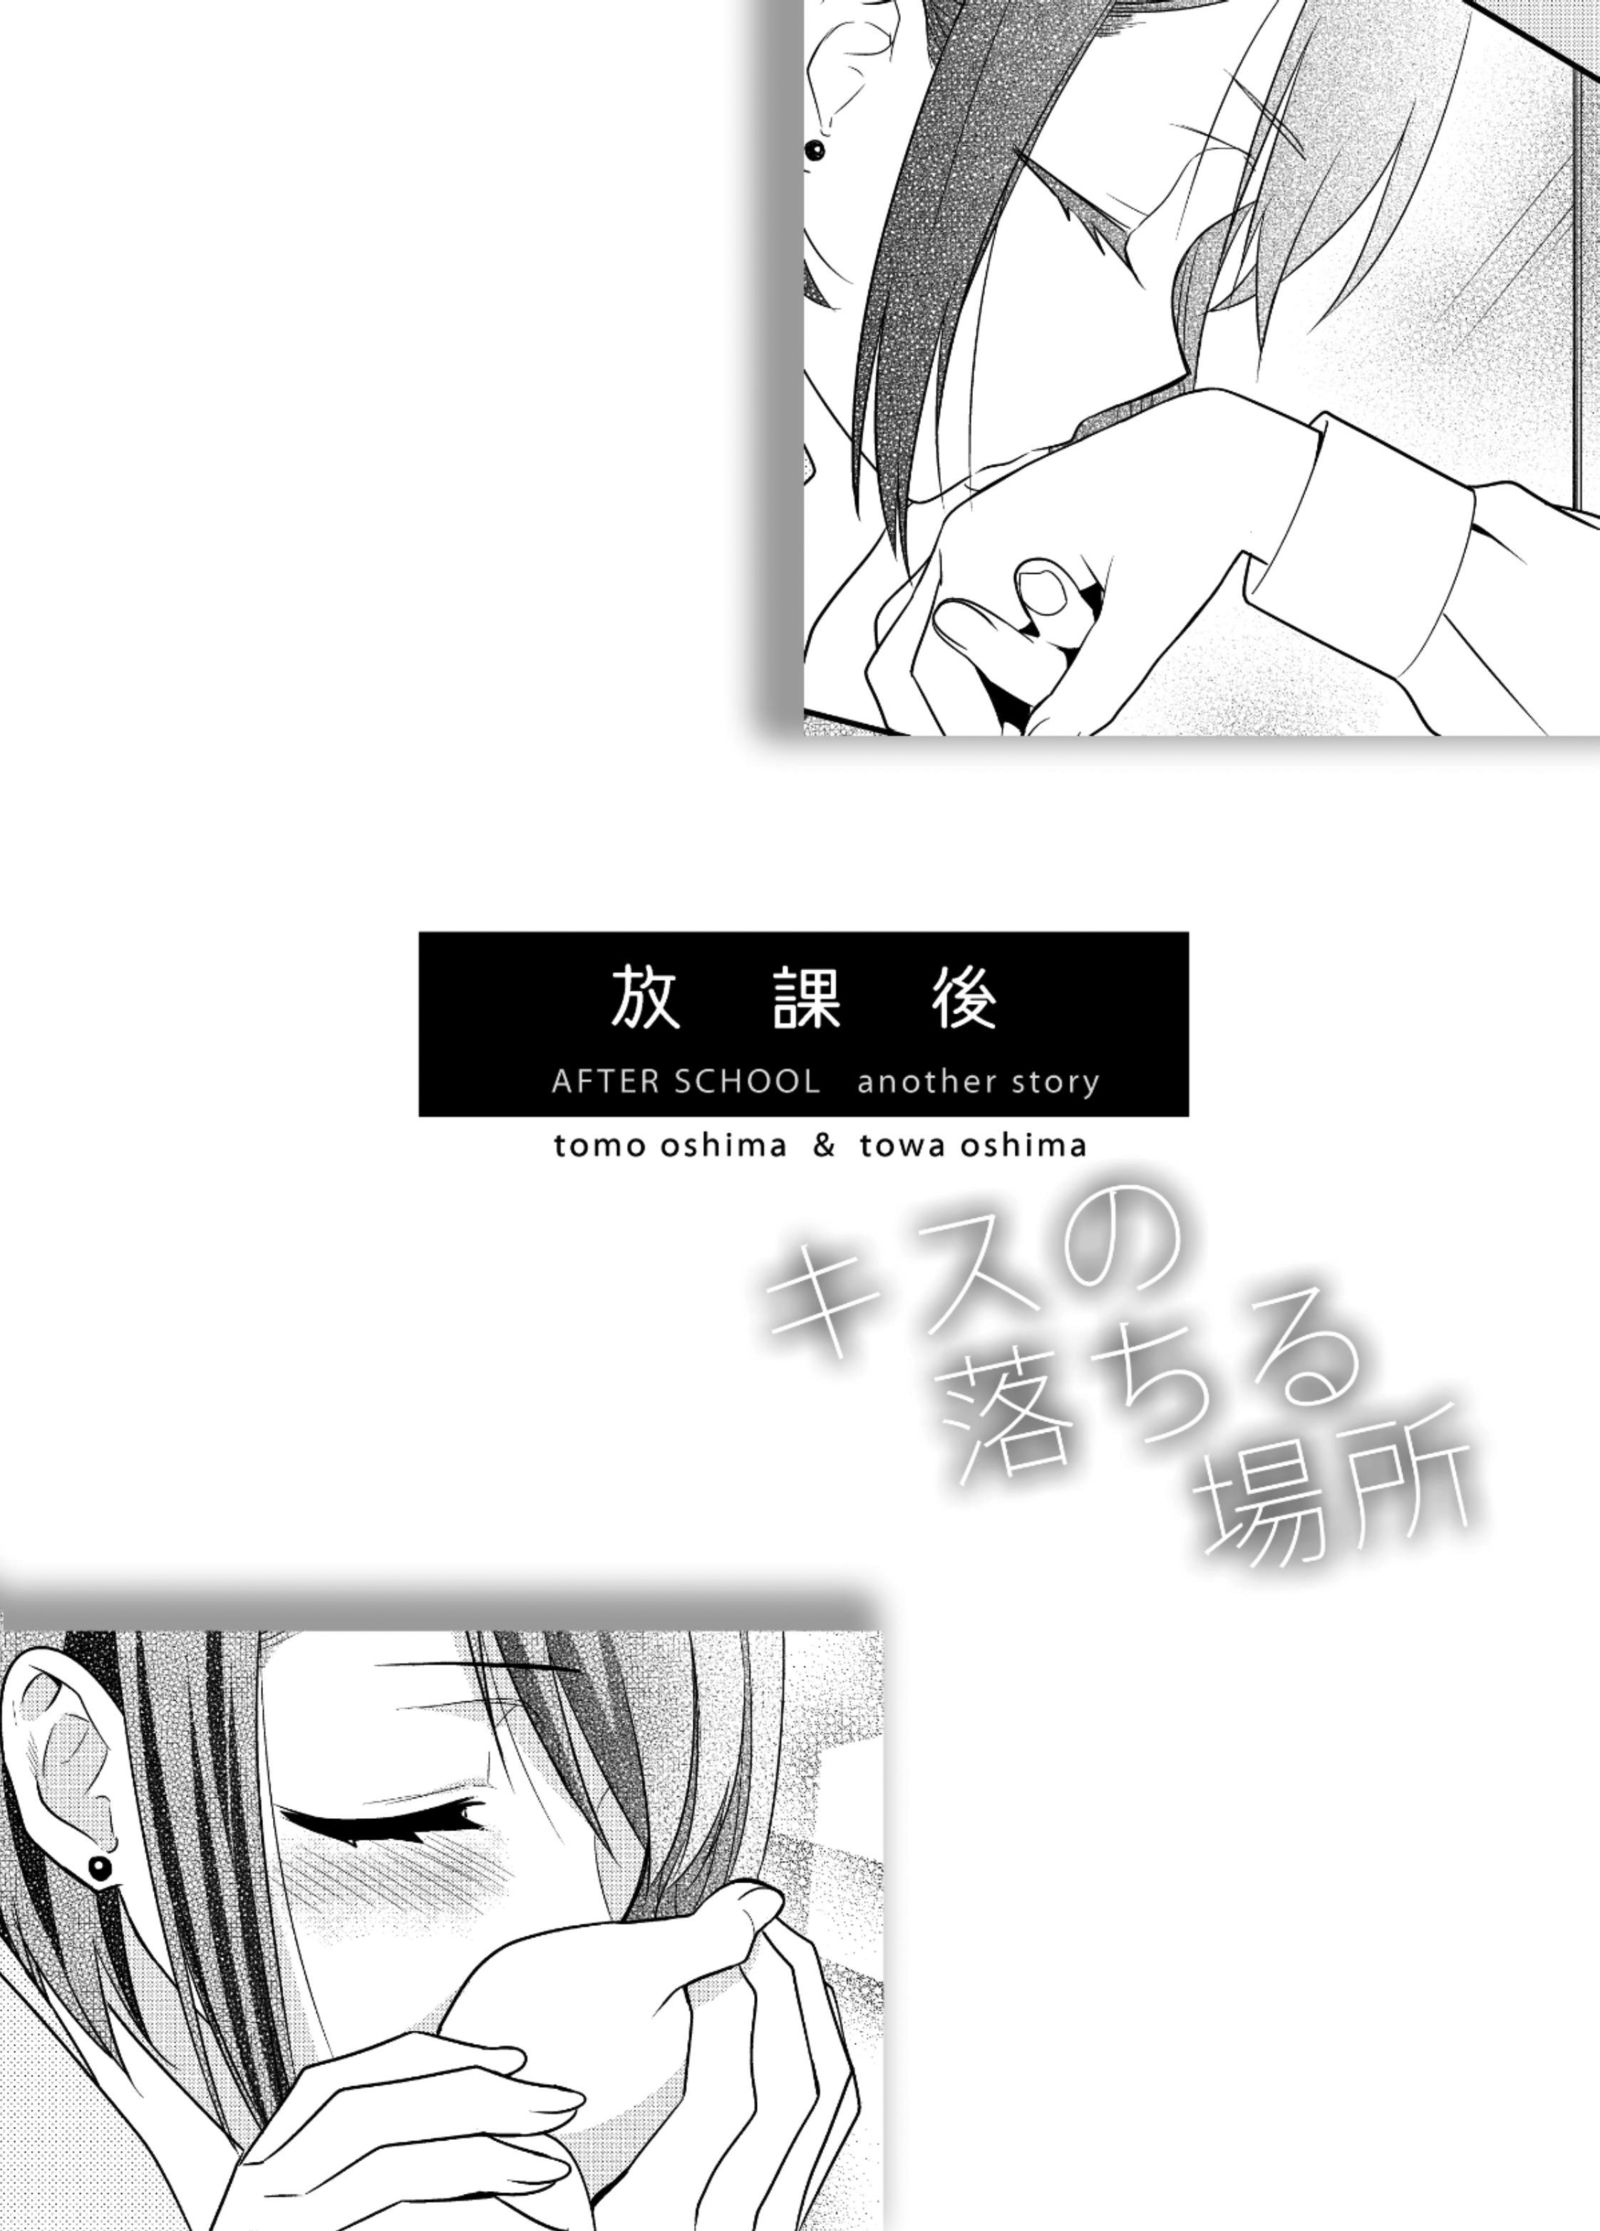 After School (Ooshima Tomo & Ooshima Towa) Chapter 7.5 - Picture 2